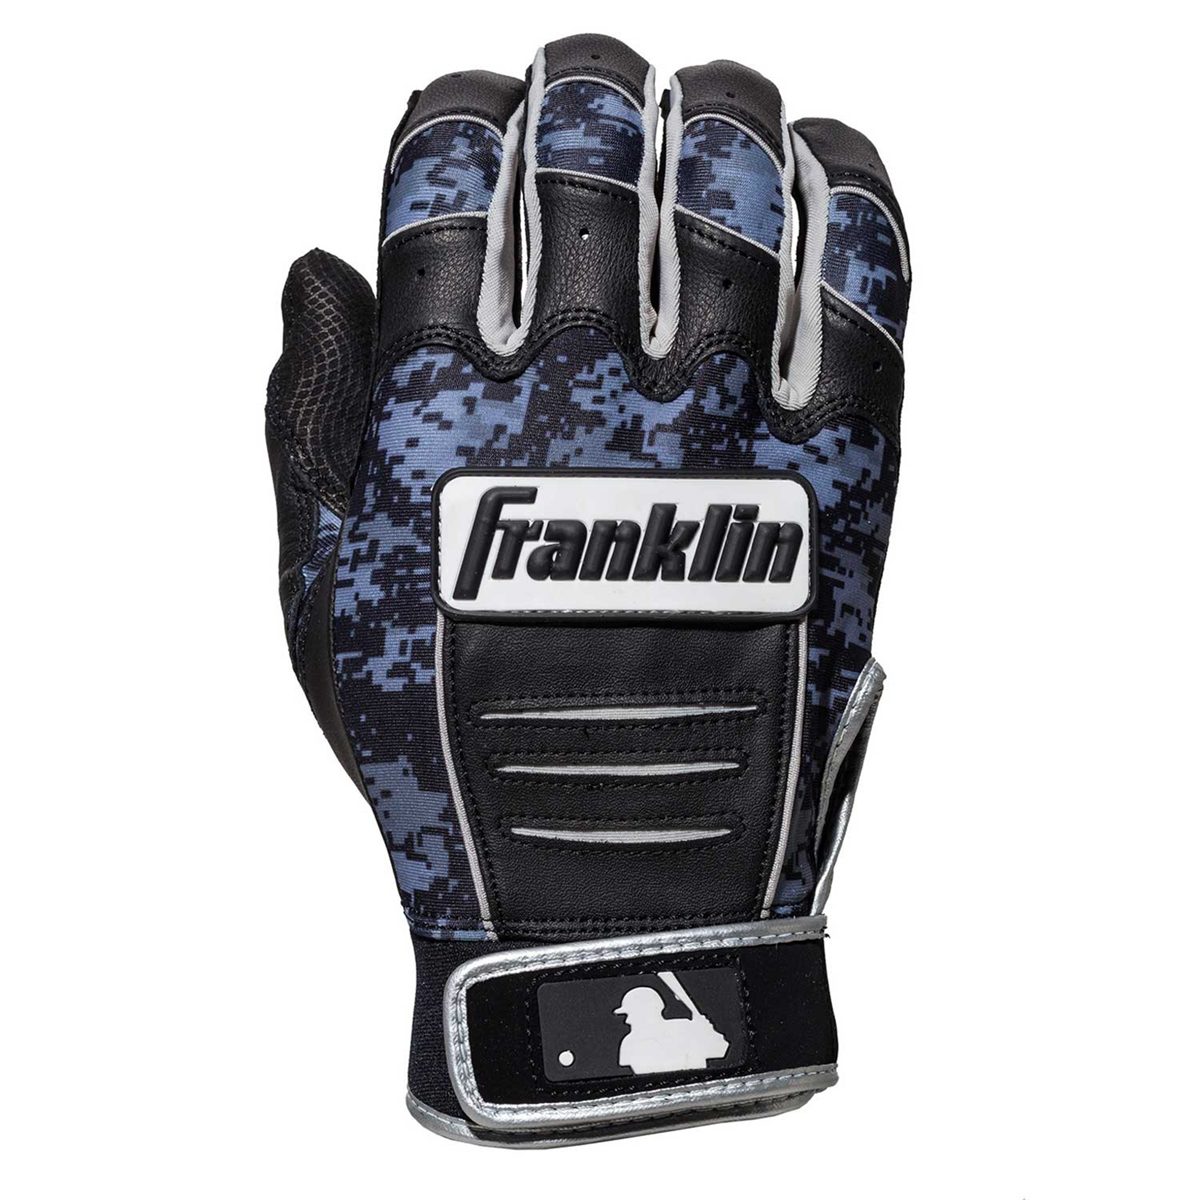 Franklin Cfx Pro Digi Camo Men's Batting Gloves | Size Small | Black/Black Digi Camo